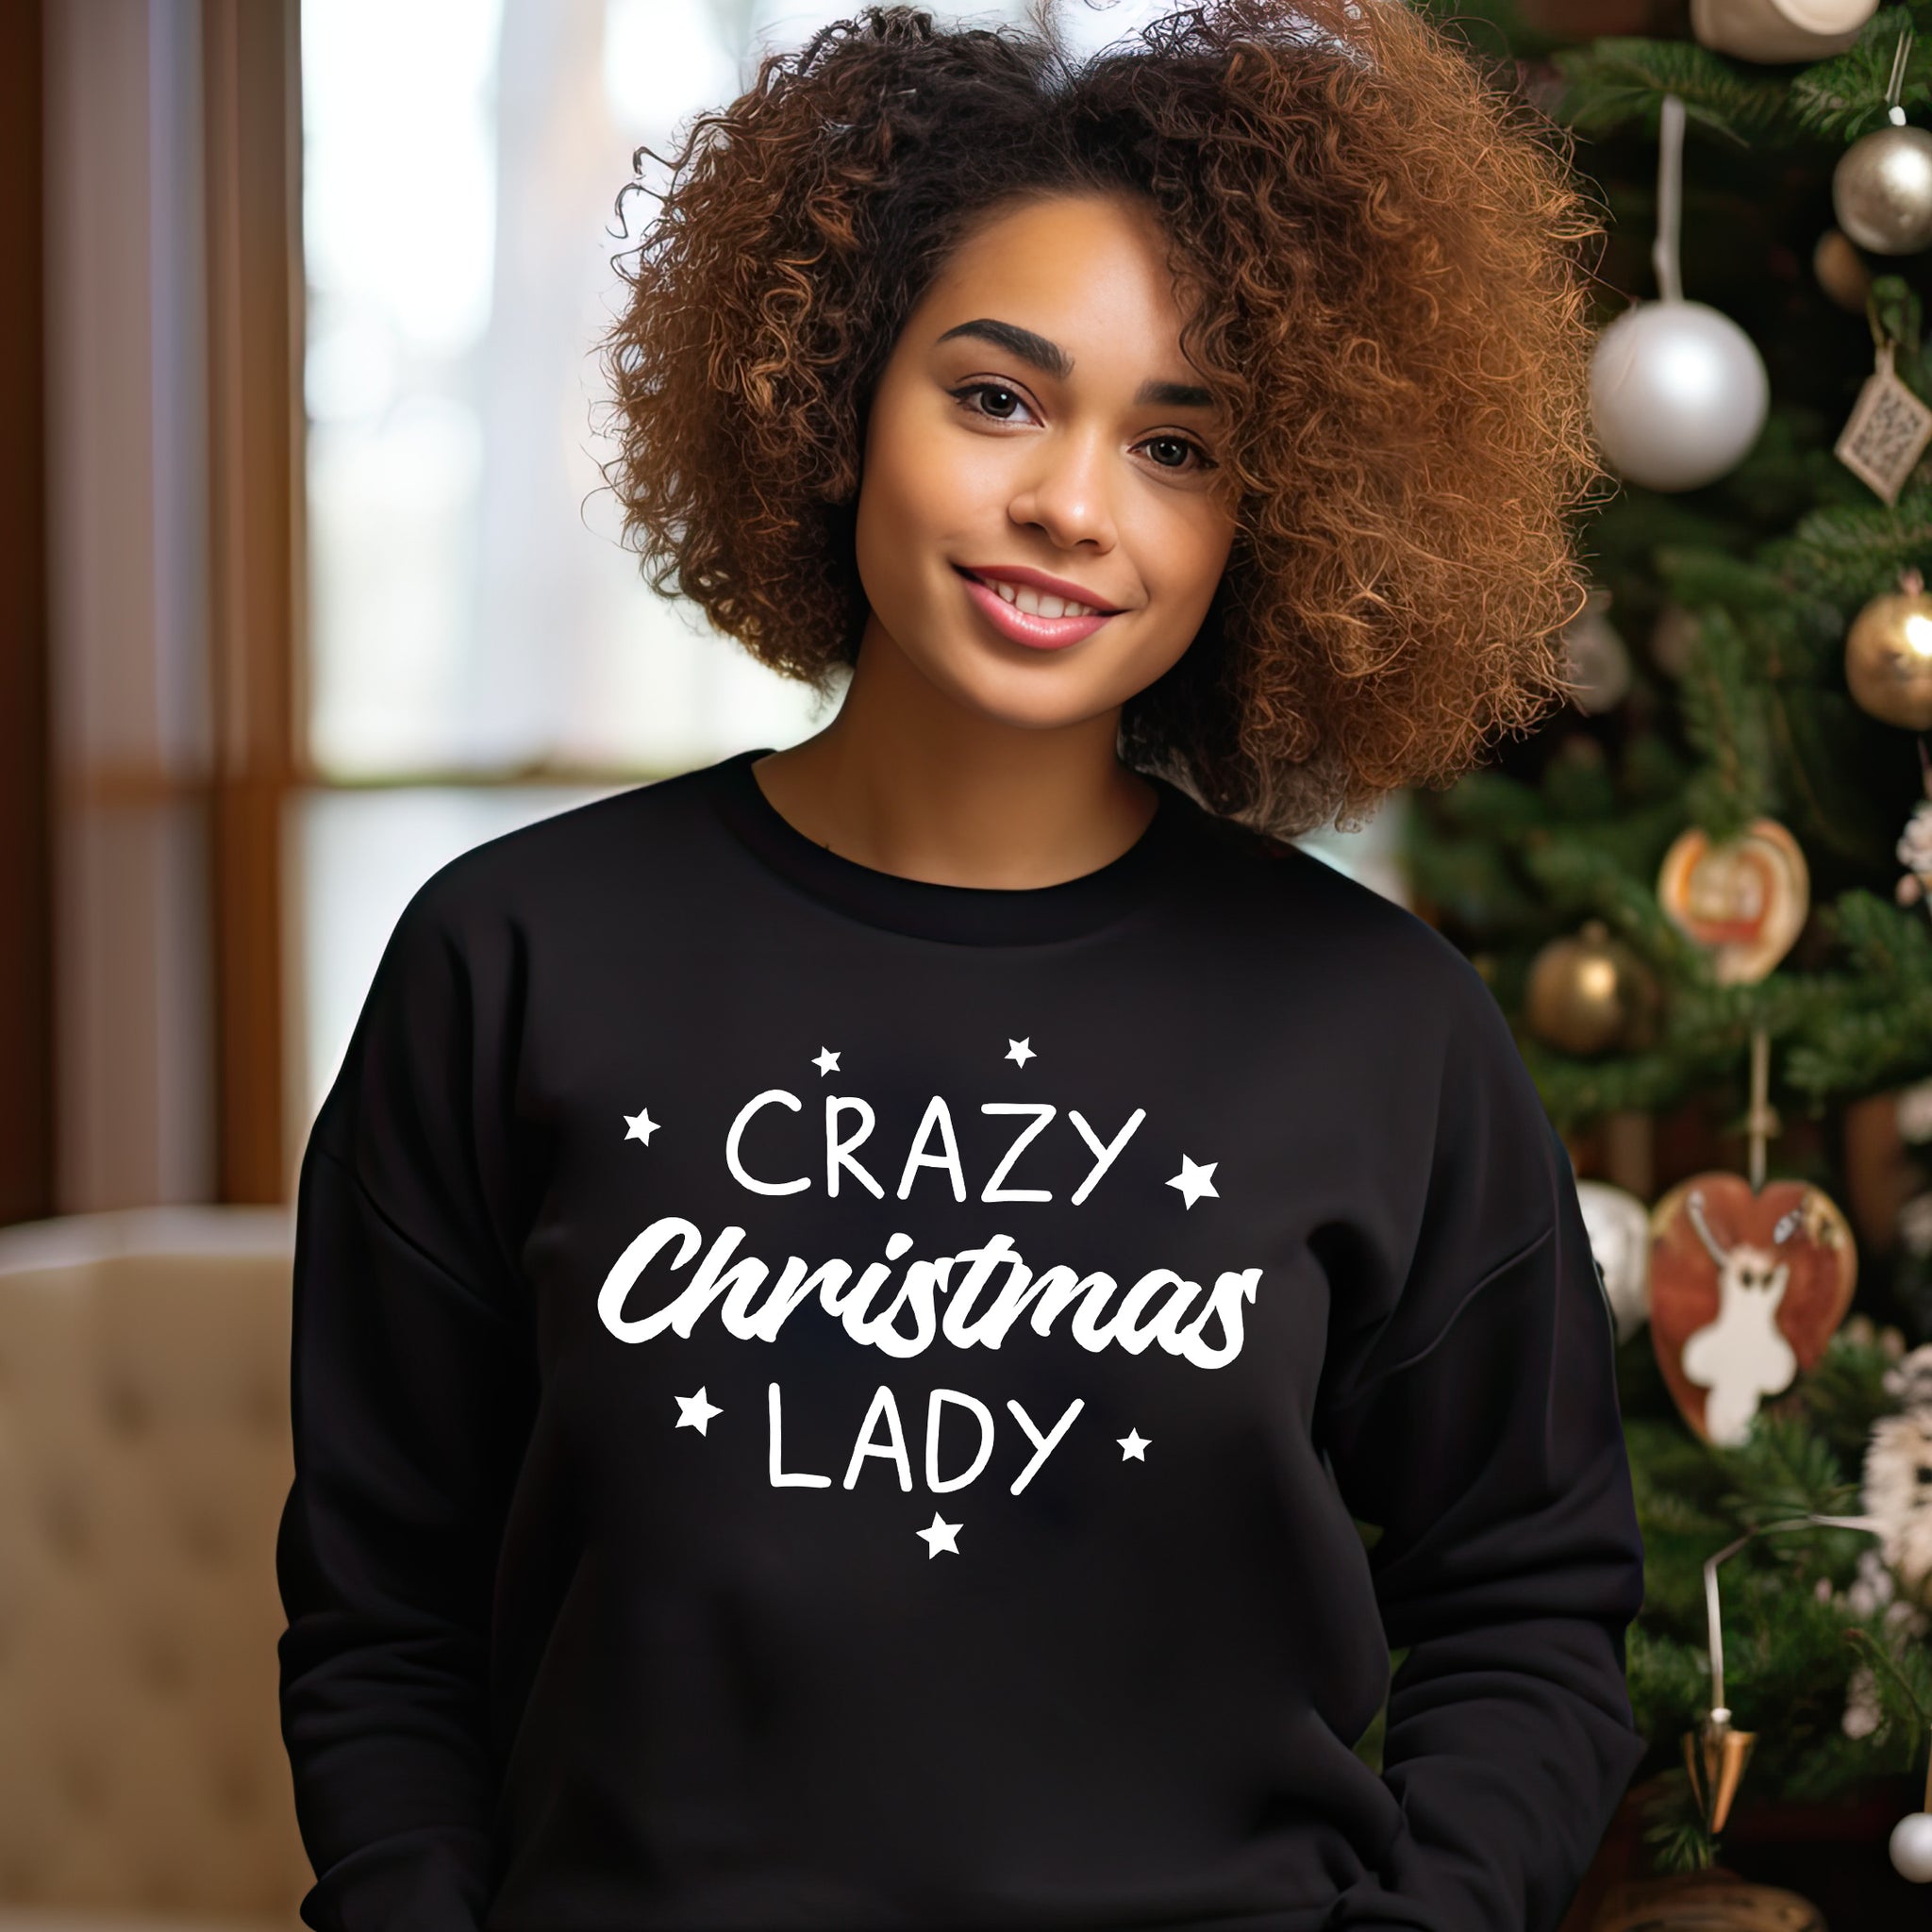 Crazy Christmas Lady Christmas Sweater - Christmas Jumper Sweatshirt - All Sizes